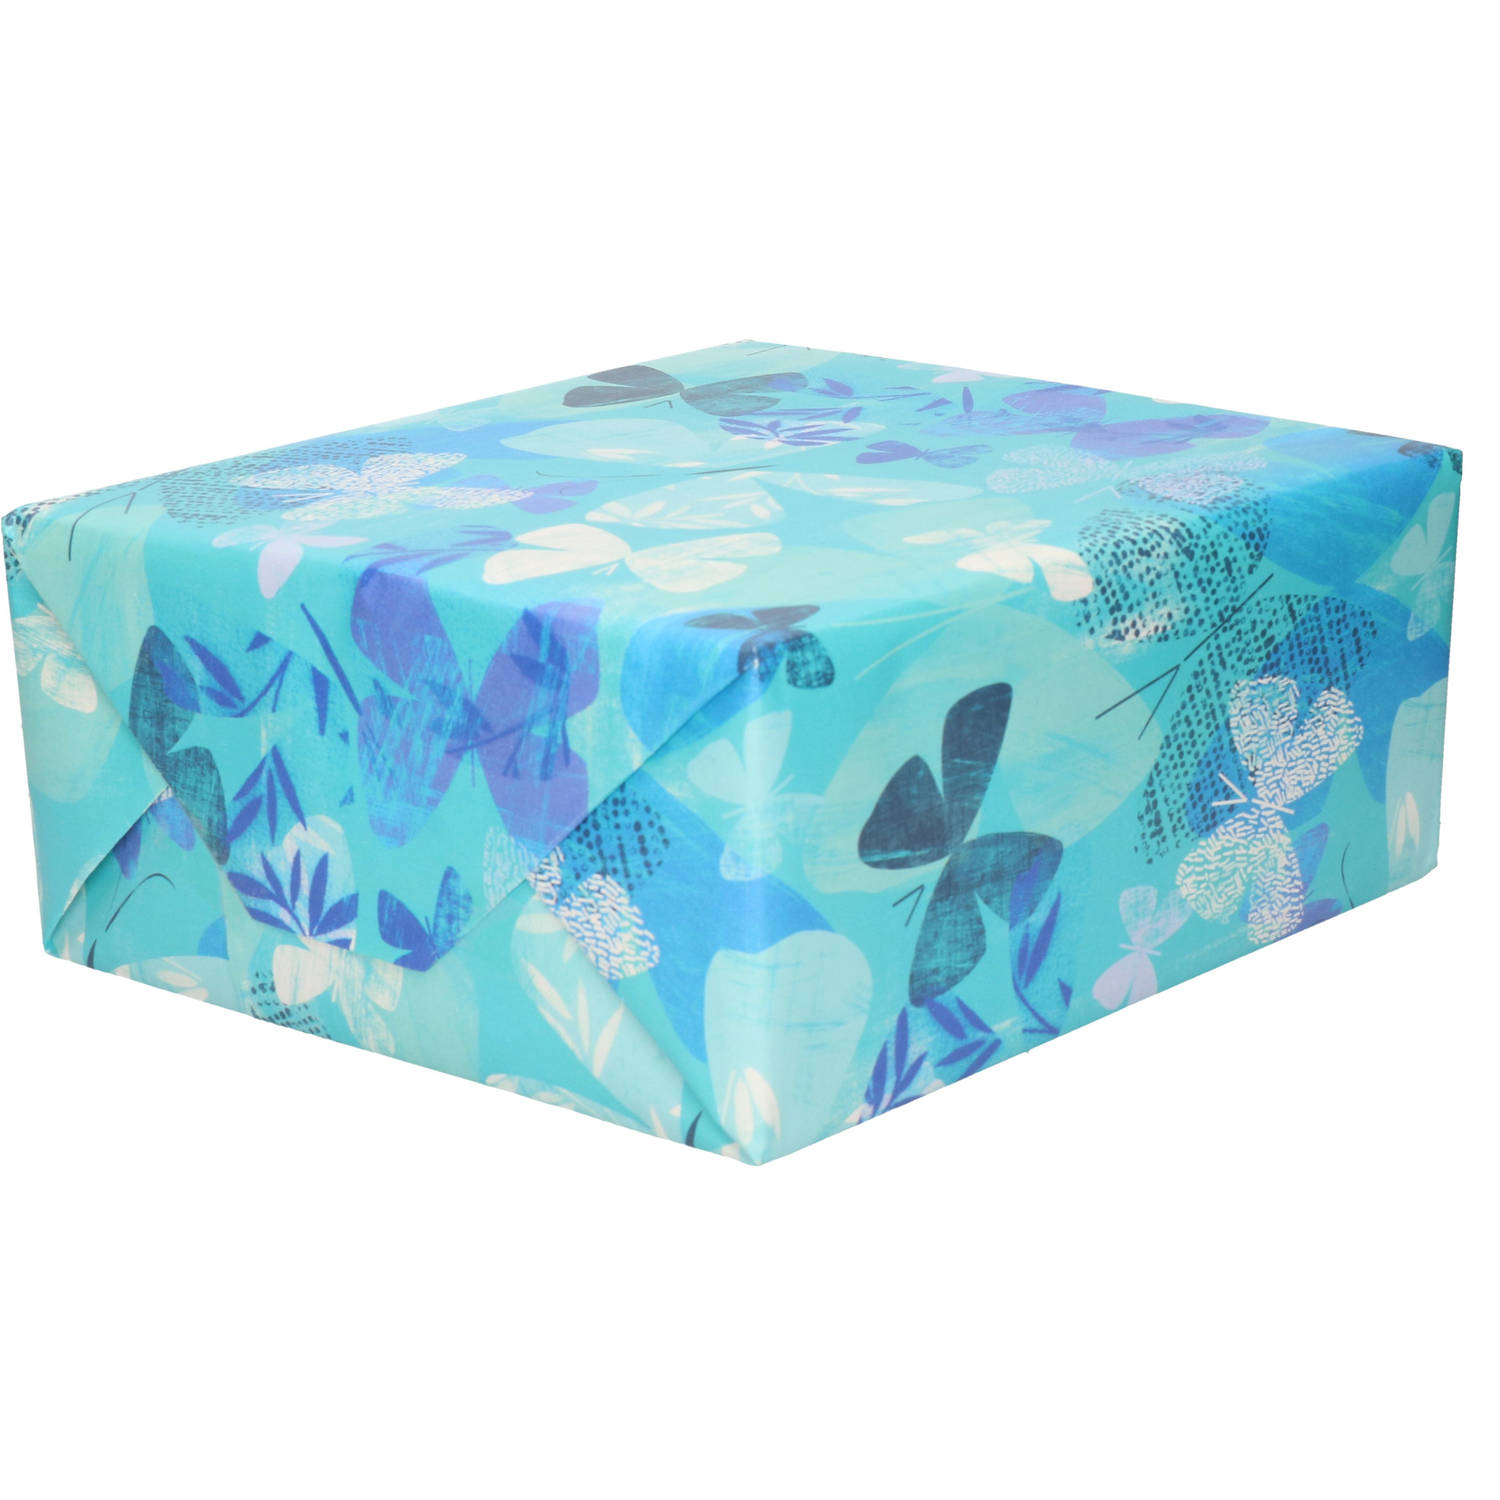 Korst Afdeling Onverschilligheid Inpakpapier/cadeaupapier - blauw - wit/blauwe vlinders - 200 x 70 cm -  Cadeaupapier | Blokker